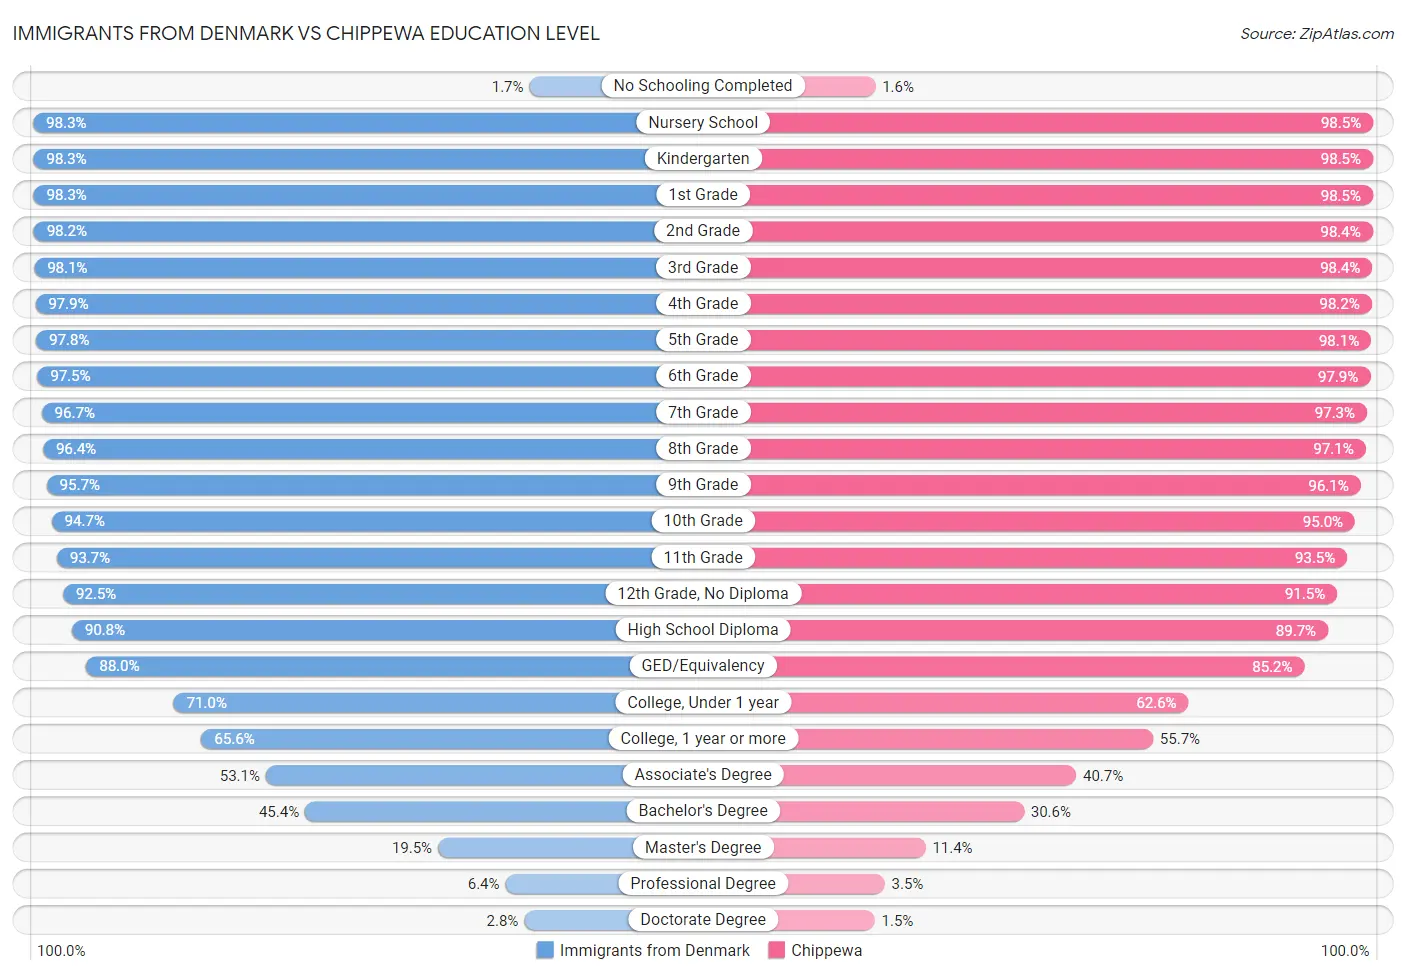 Immigrants from Denmark vs Chippewa Education Level